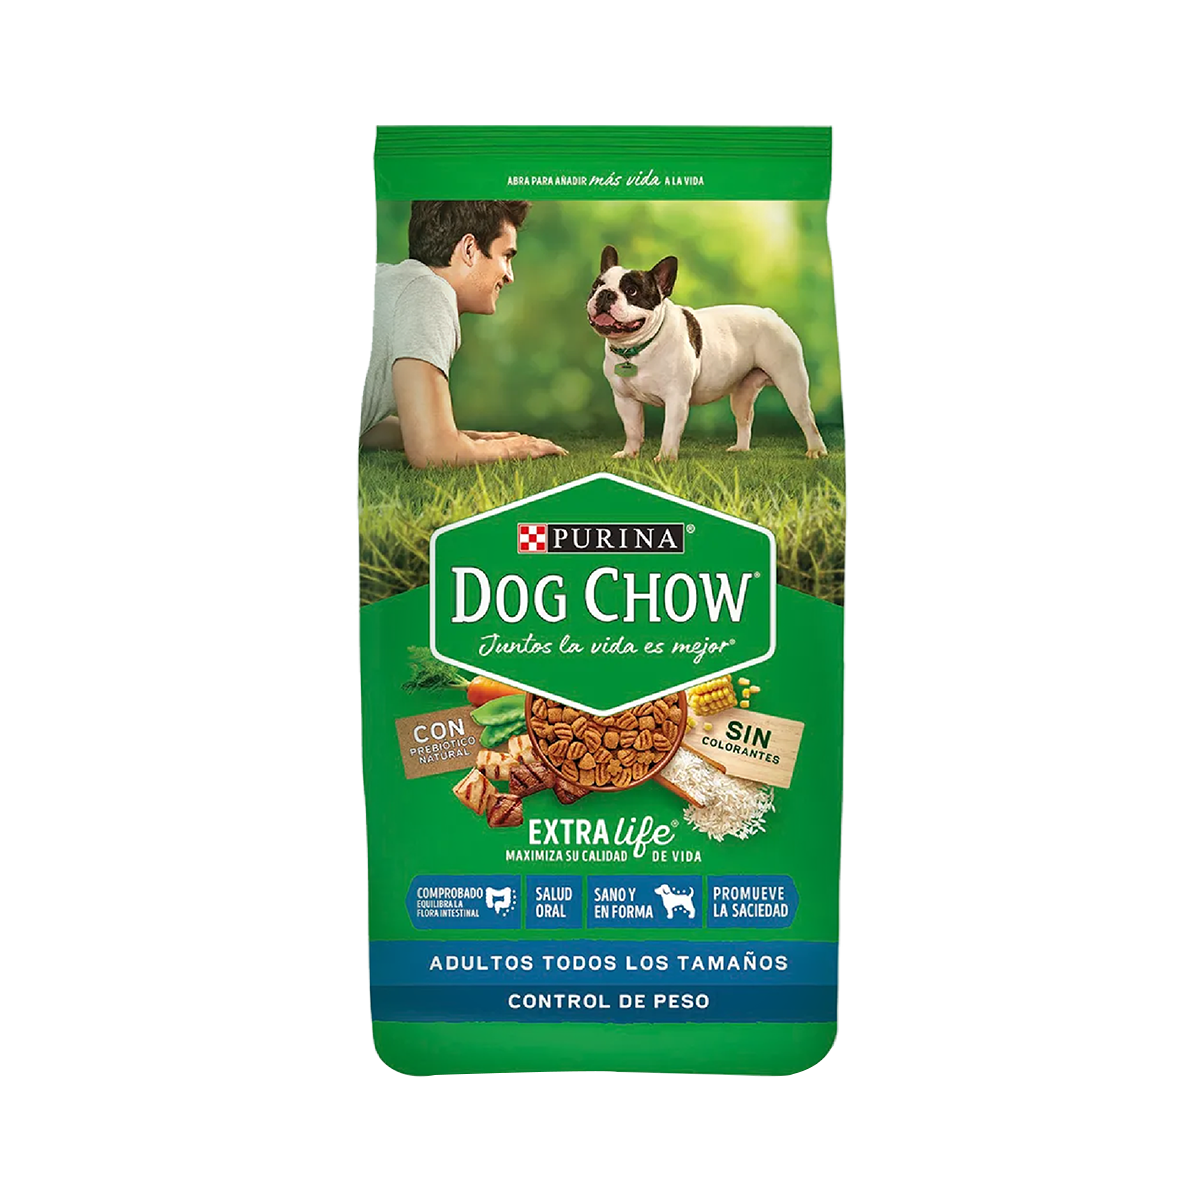 Dog_Chow_Control_de_Peso_Adultos_1200x1200.png